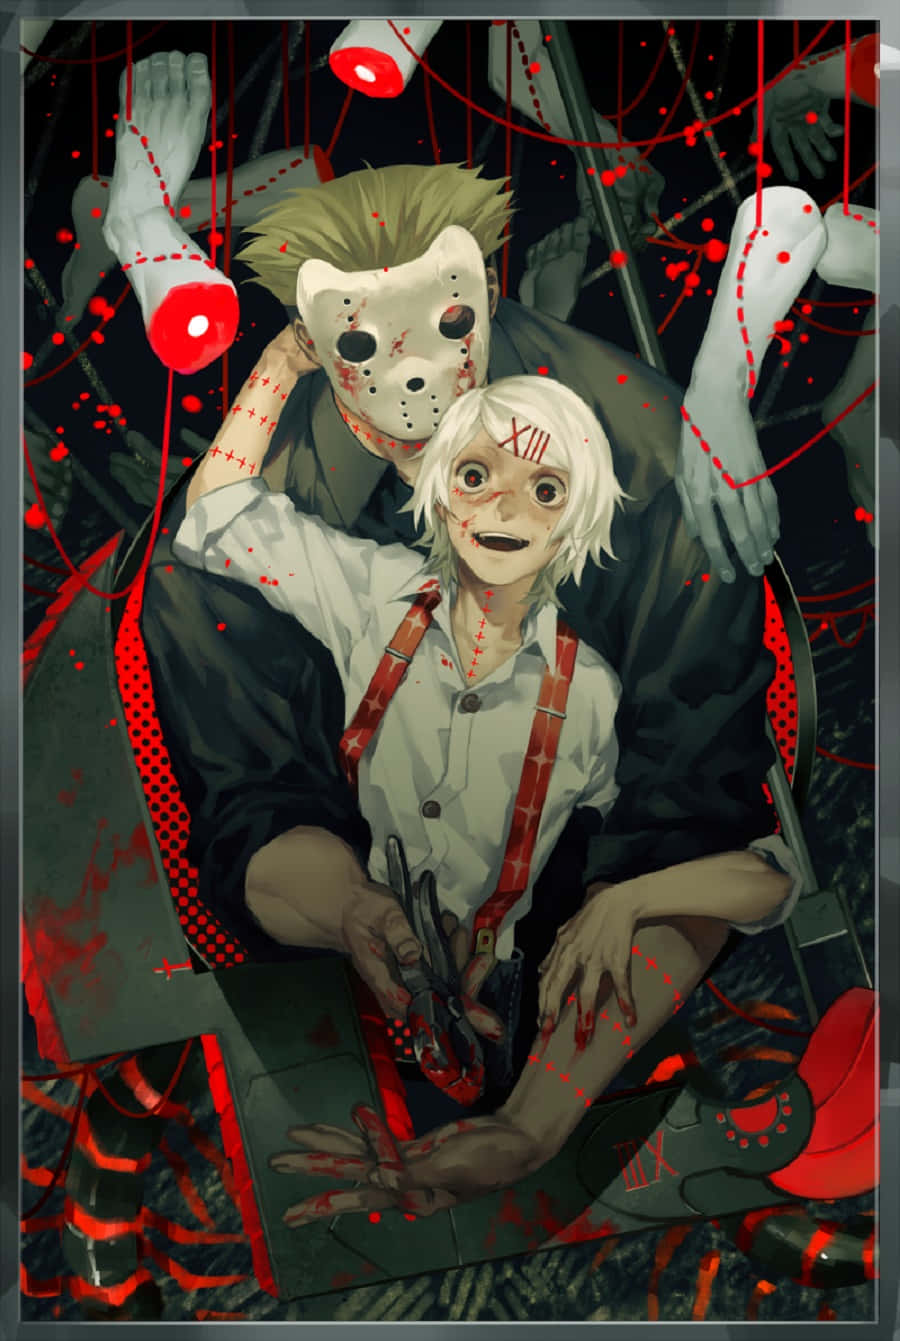 Caption: Yakumo Oomori, aka Jason, from Tokyo Ghoul Wallpaper